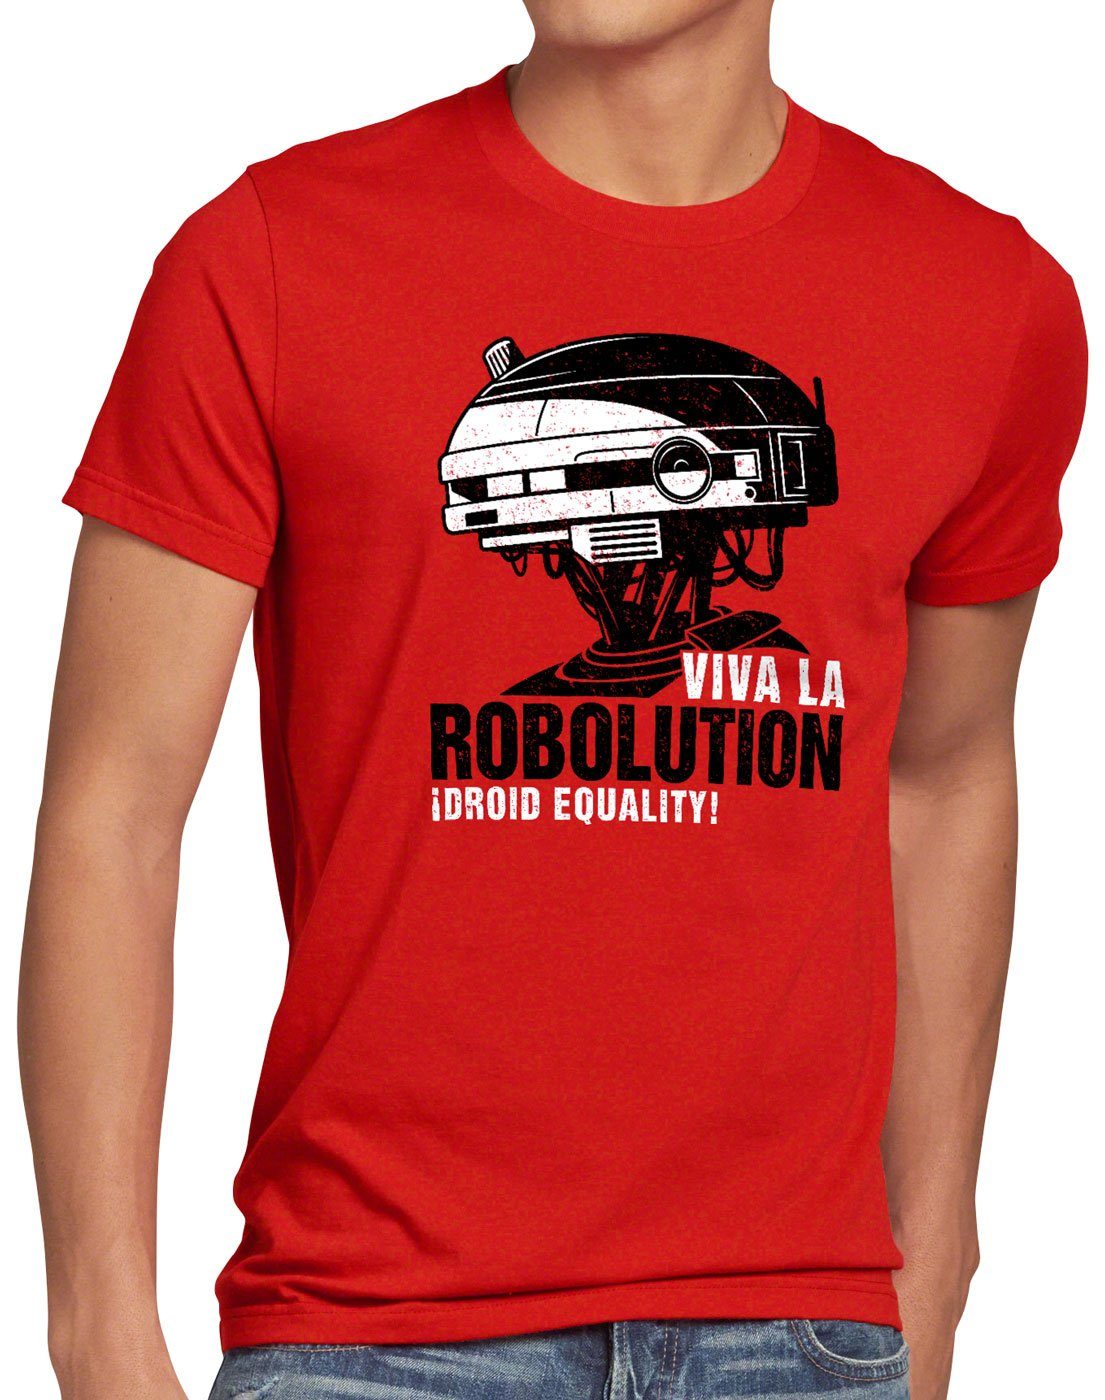 solo guevara T-Shirt style3 Equality Print-Shirt Herren rot revolution Droid